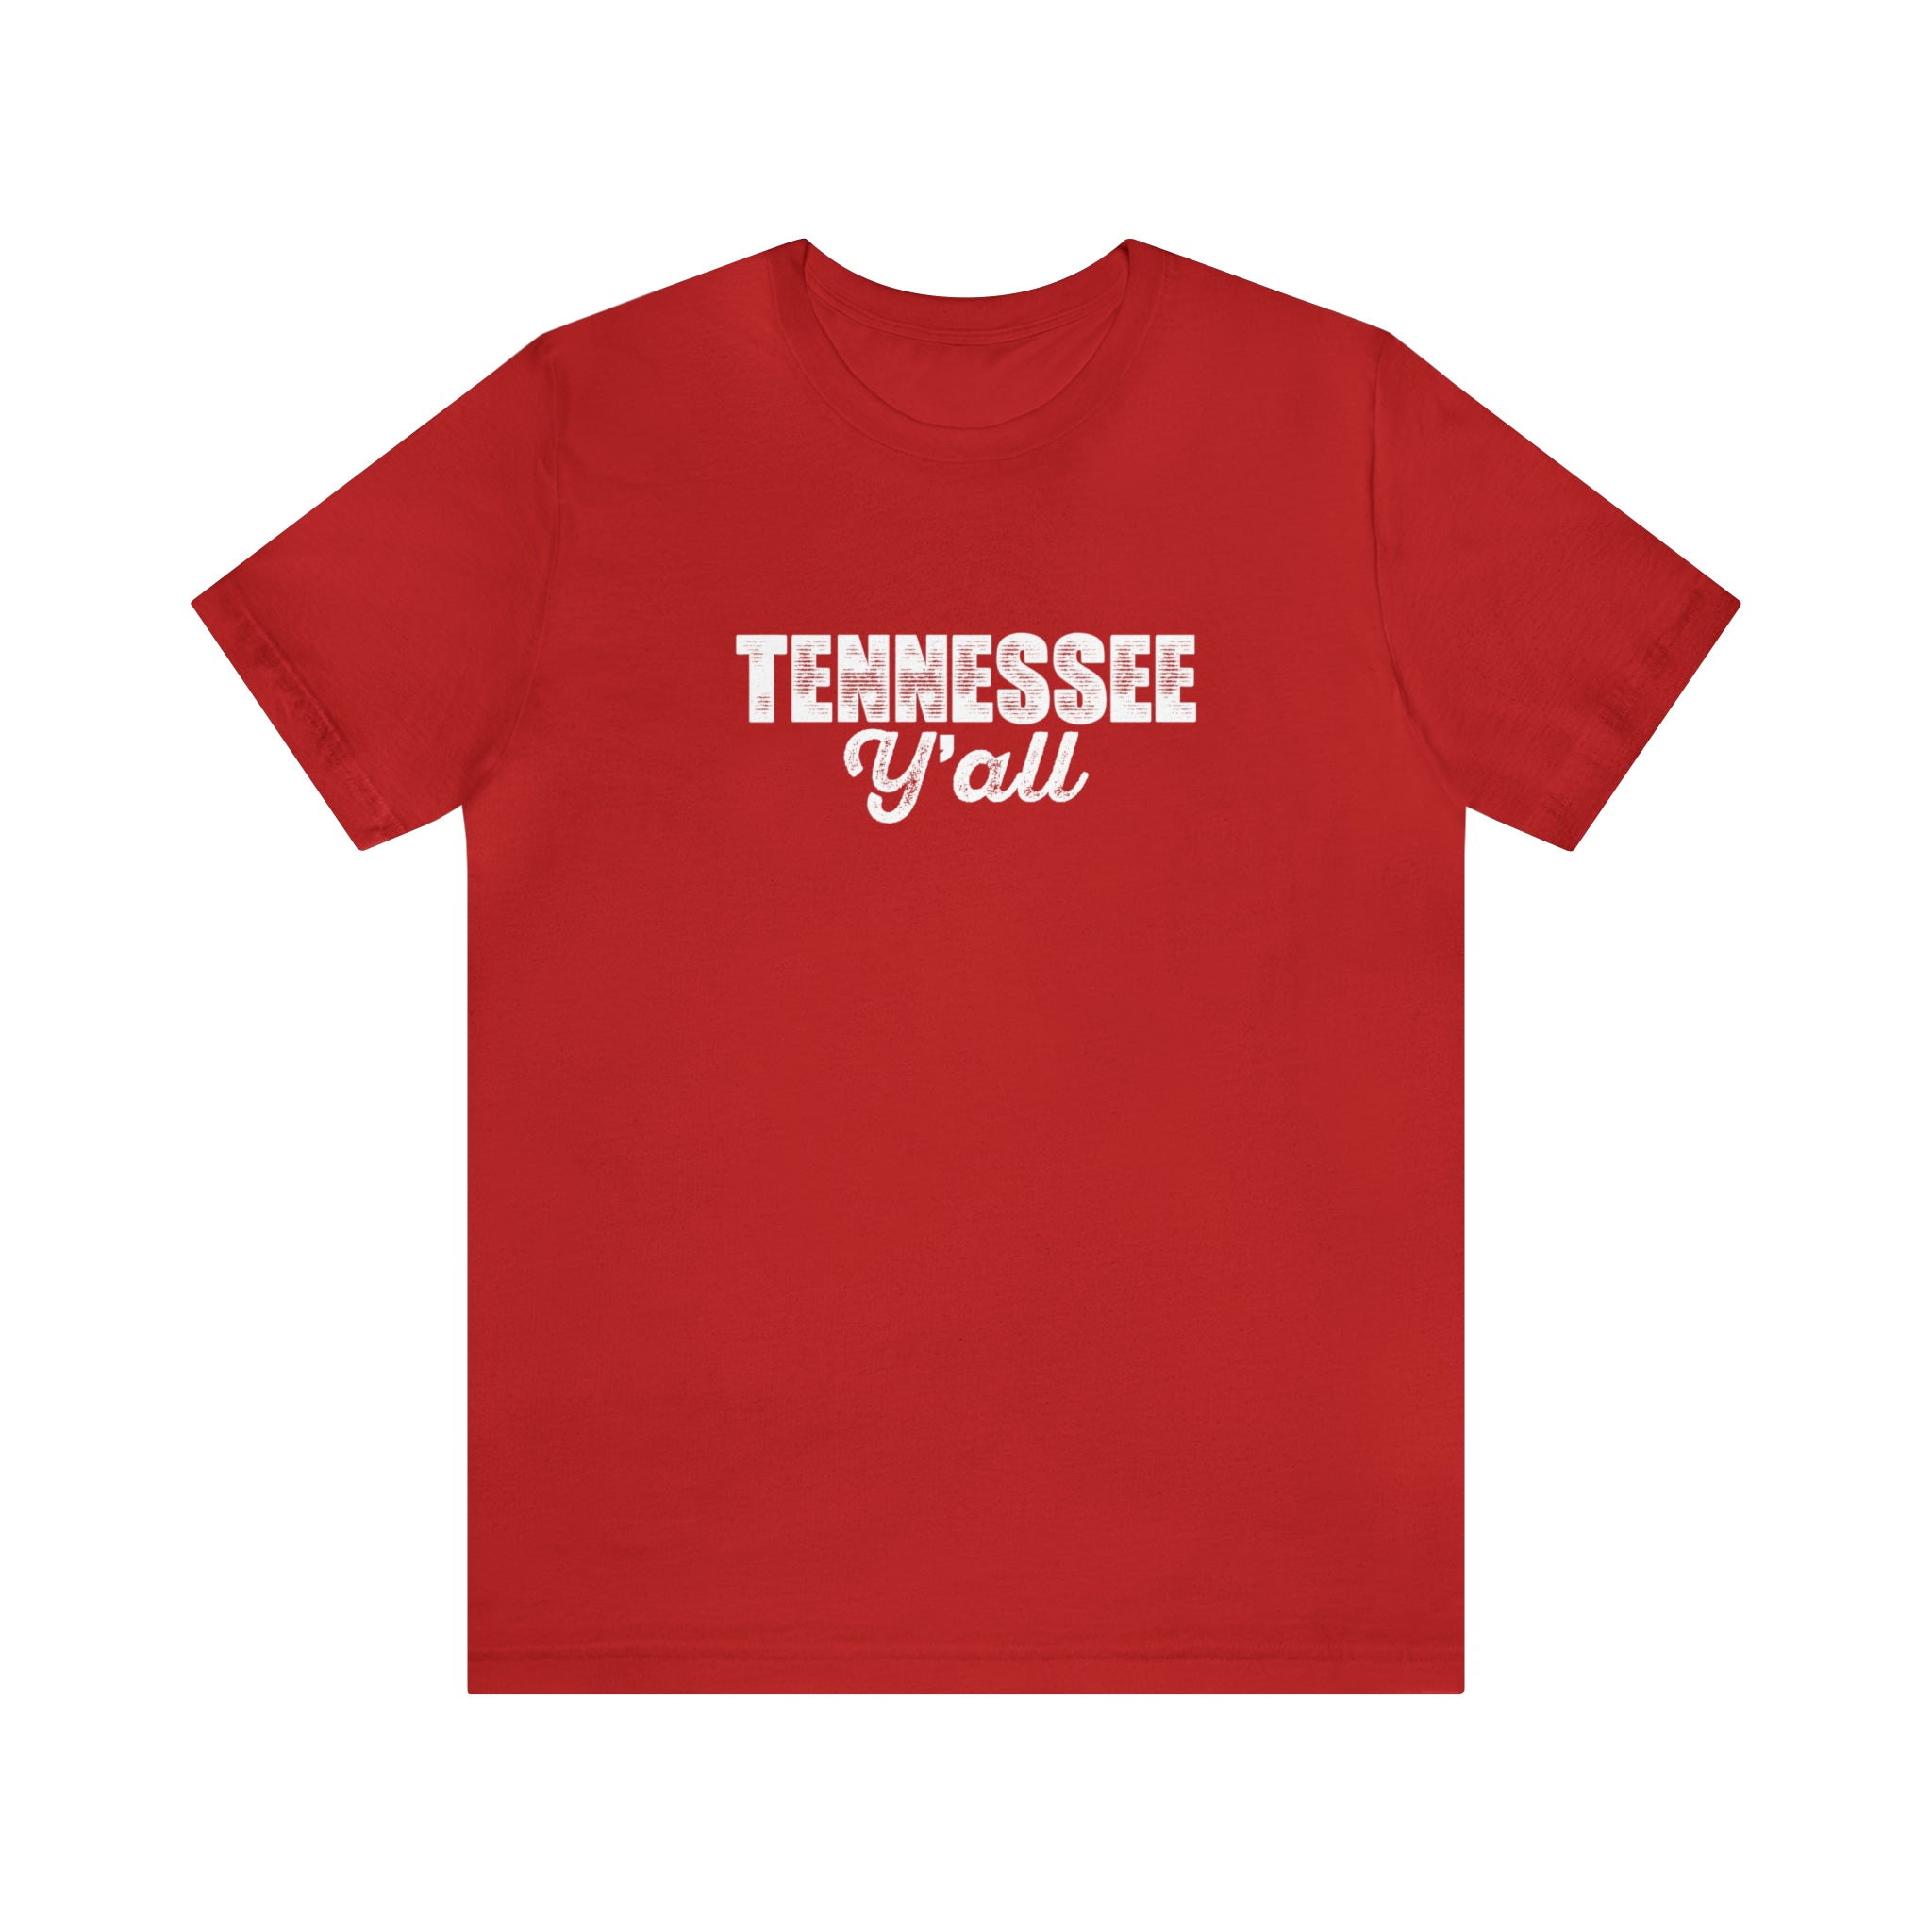 Tennessee Yall Tee